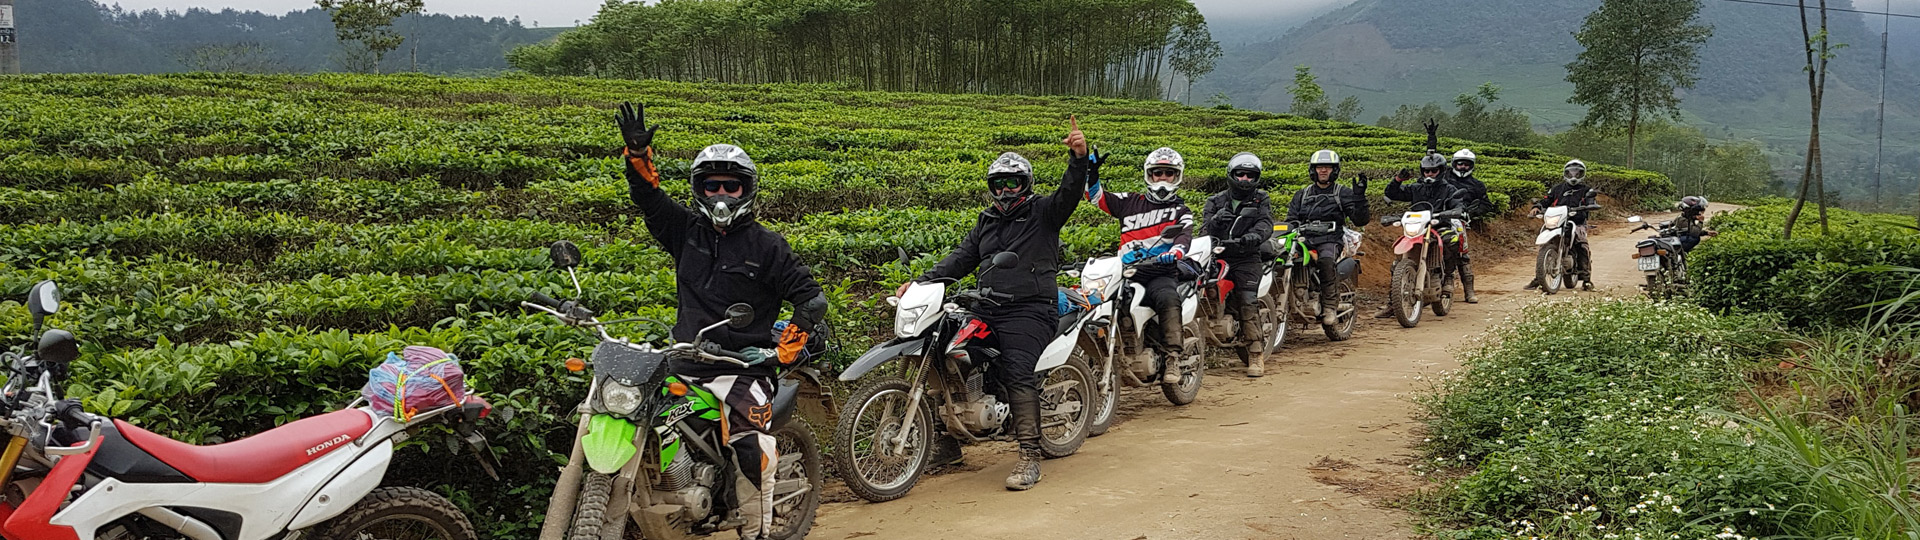 Cambodia Motorcycle Tours 6